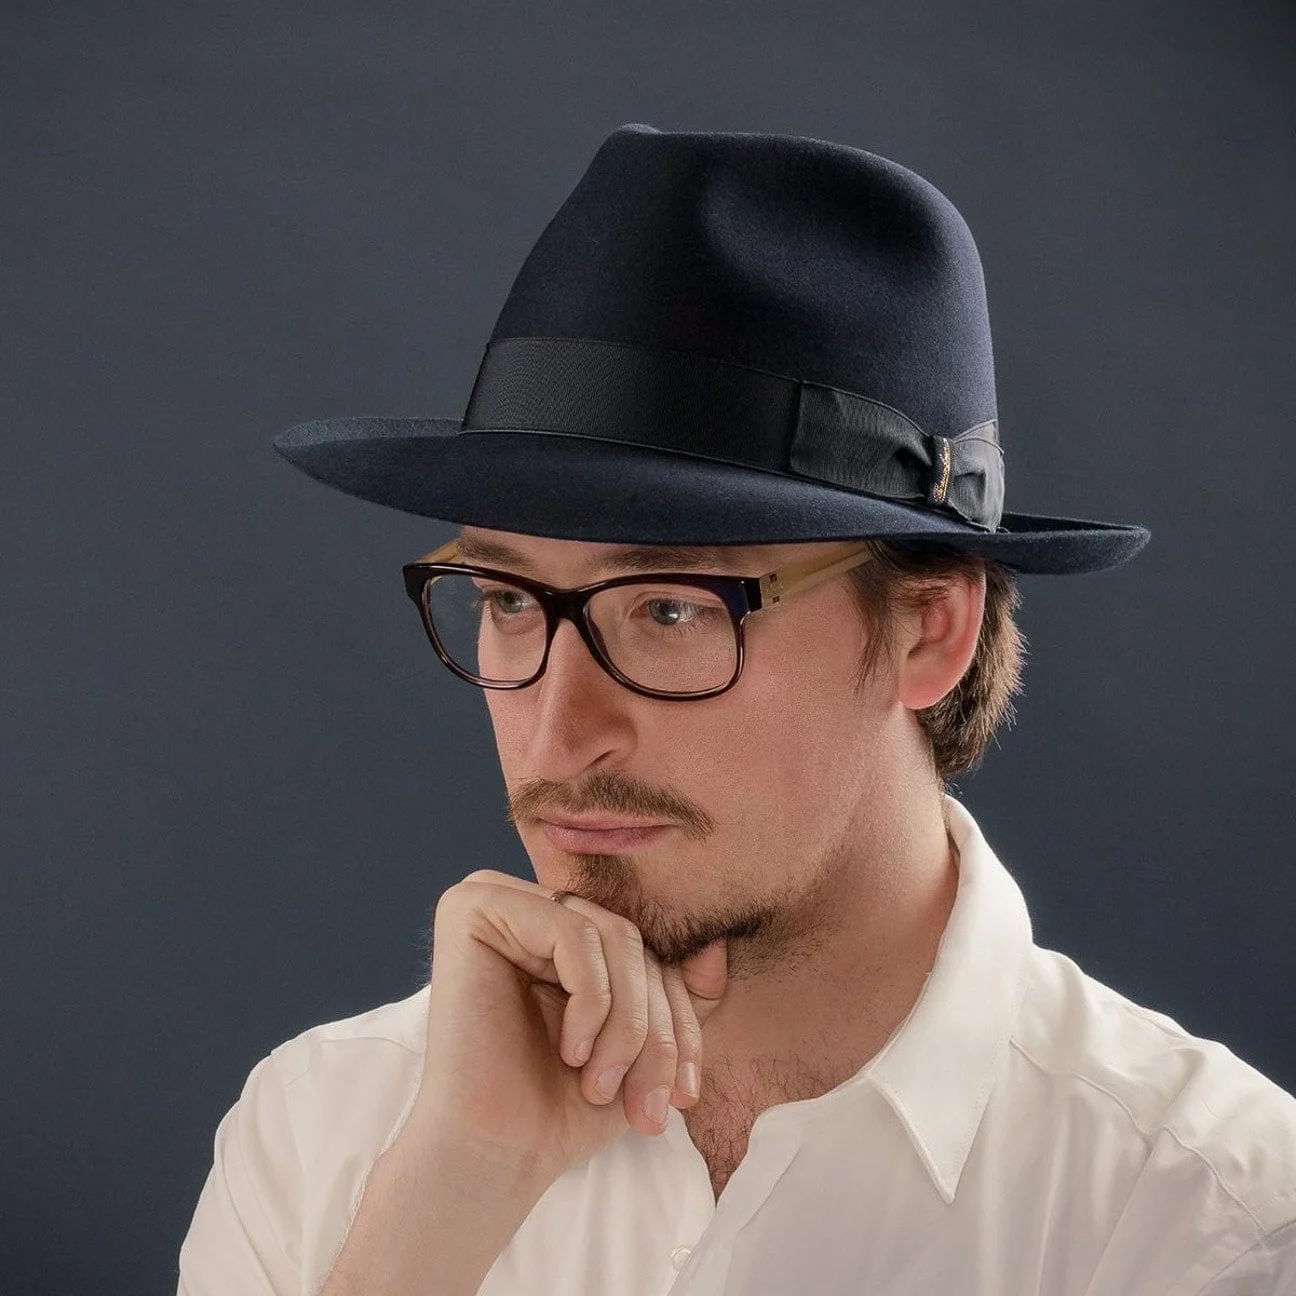 Borsalino Hats: Timeless Elegance for the Modern Gentleman